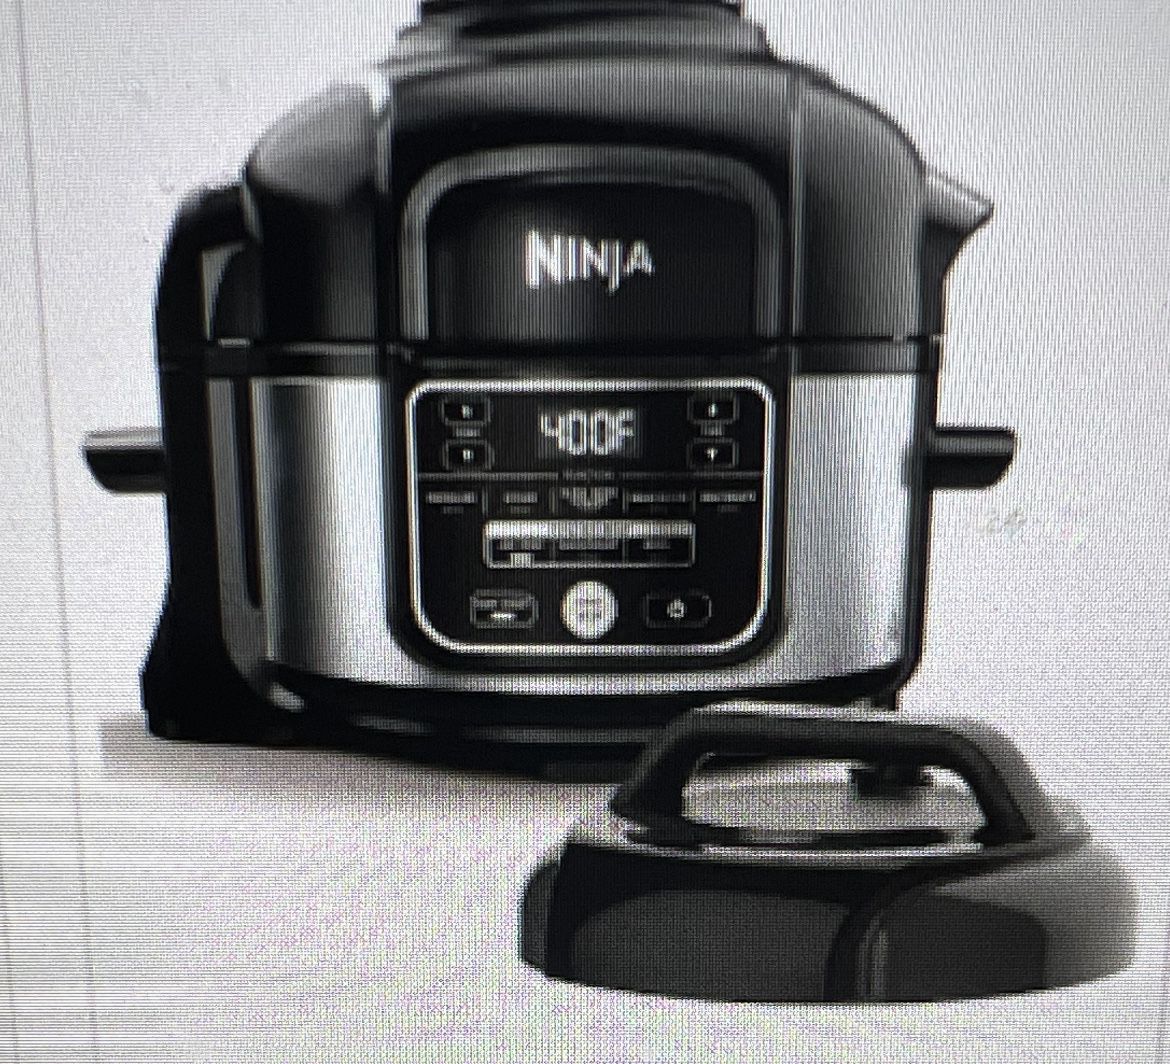 Ninja foodi 6.5L Used Twice.